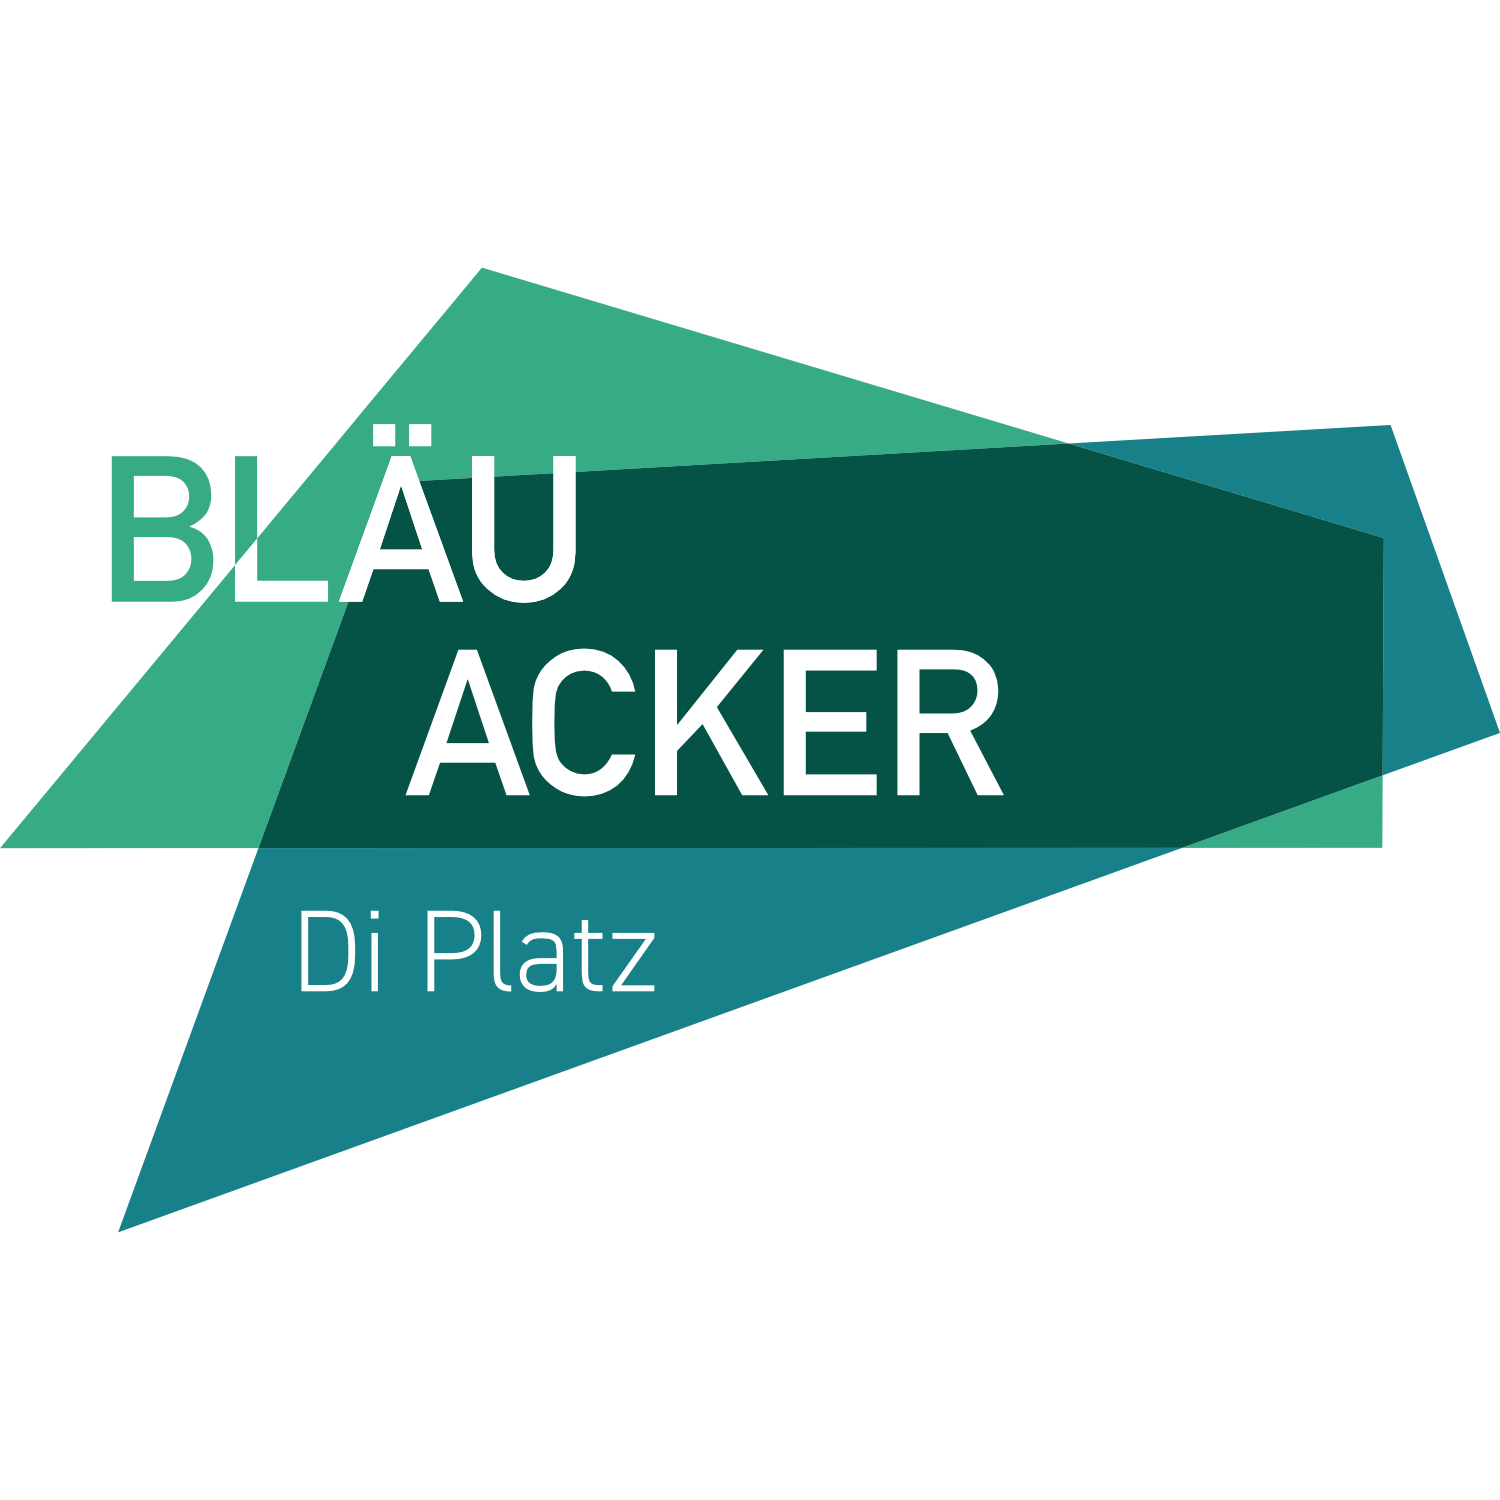 (c) Blaeuacker.ch